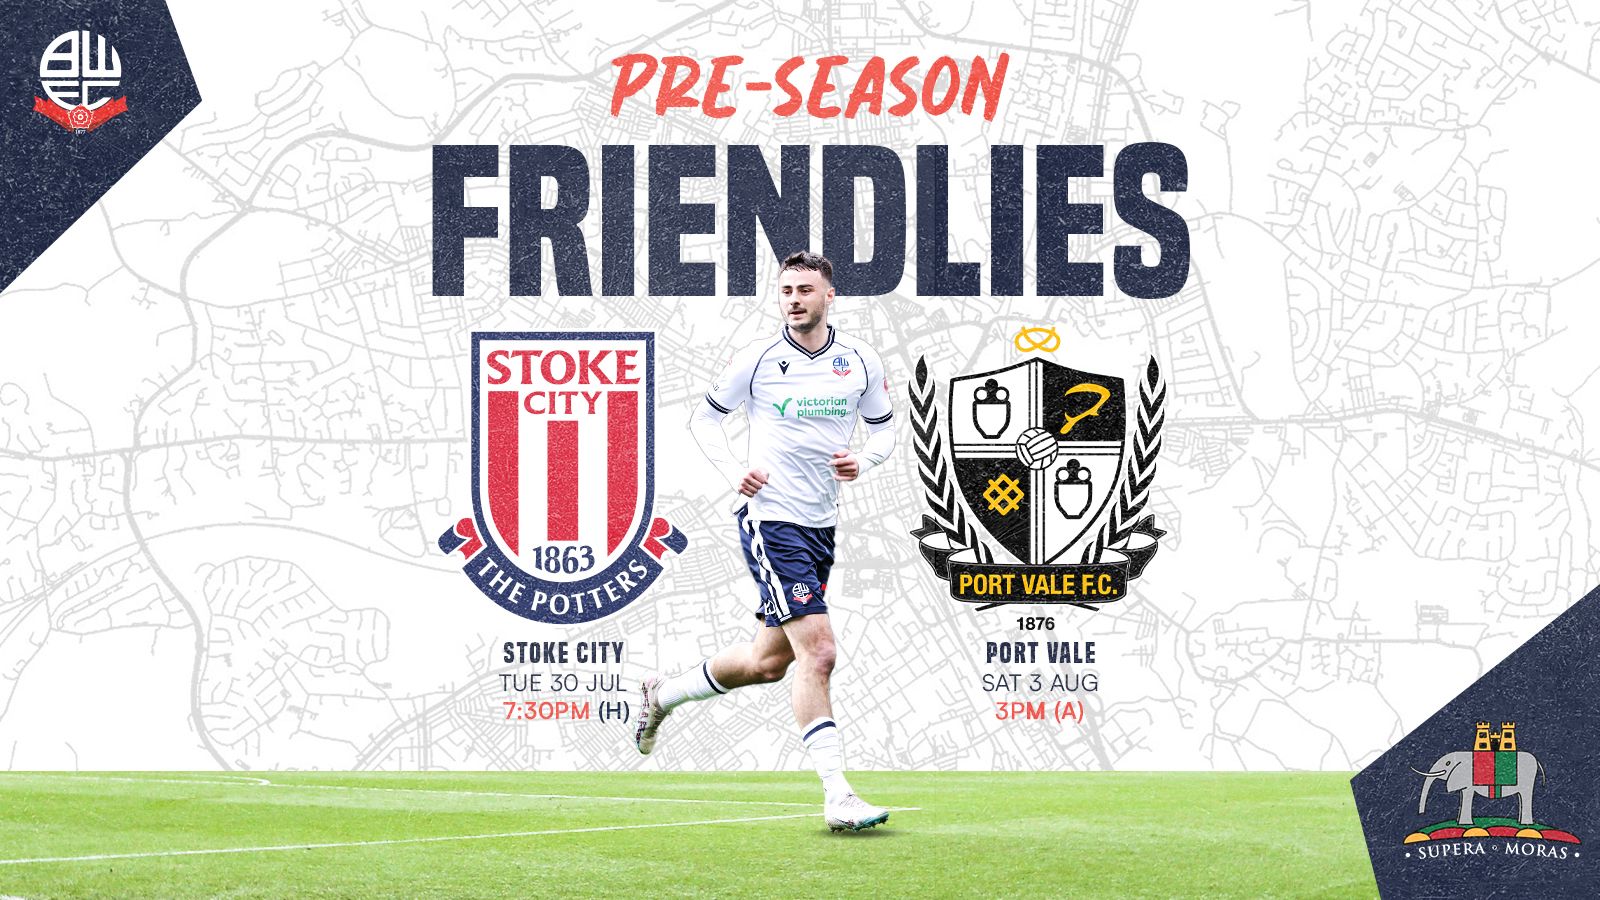 Stoke friendly graphic